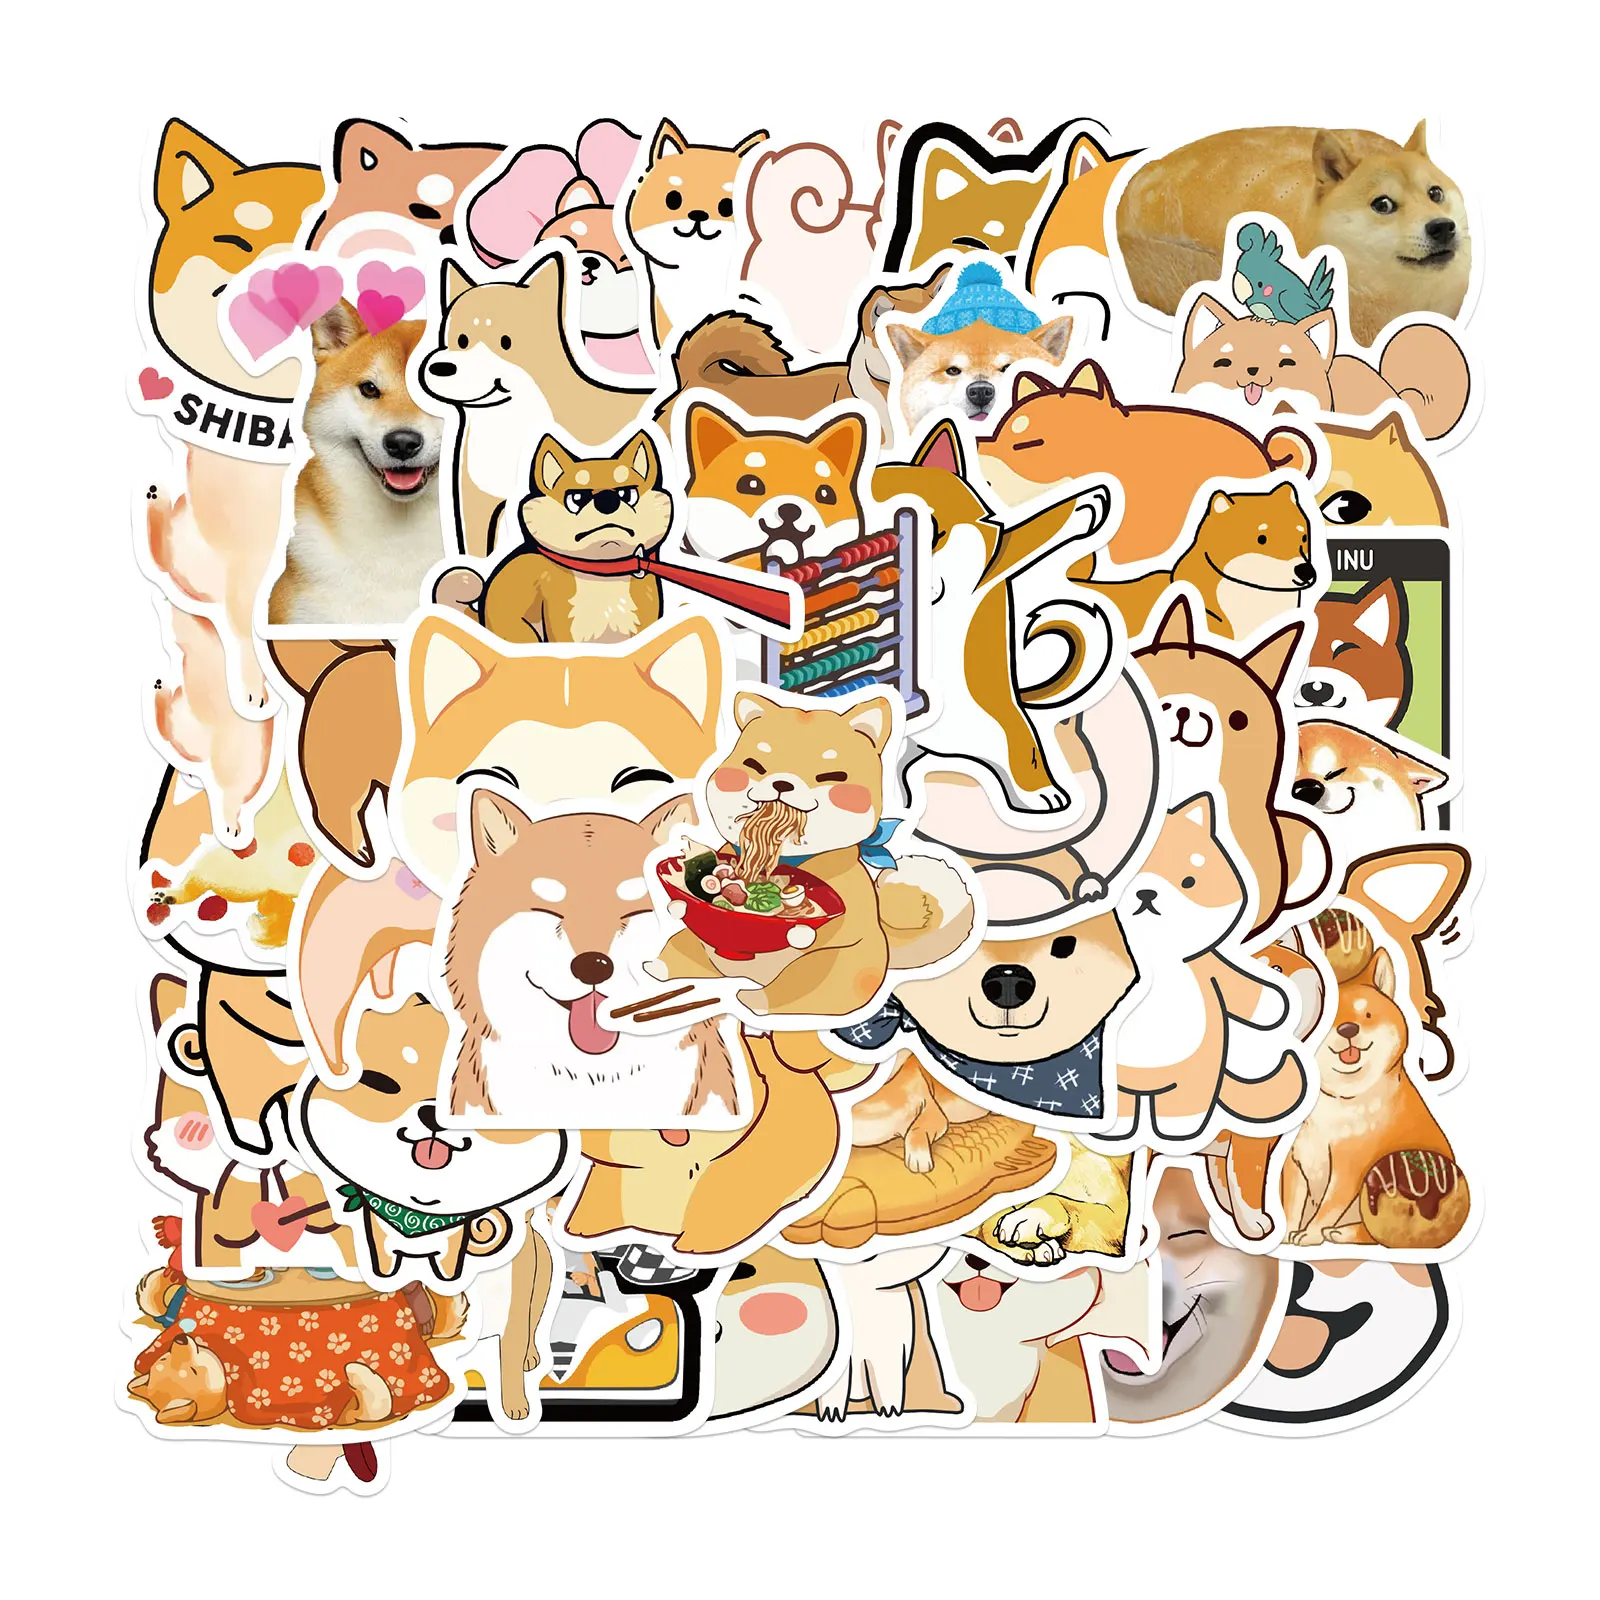 

50PCS Lovely Japanese Shiba Inu Dog Animal Stickers for Kids DIY Stationery Scrapbook Laptop Guitar Suitcase Cute Puppy Sticker